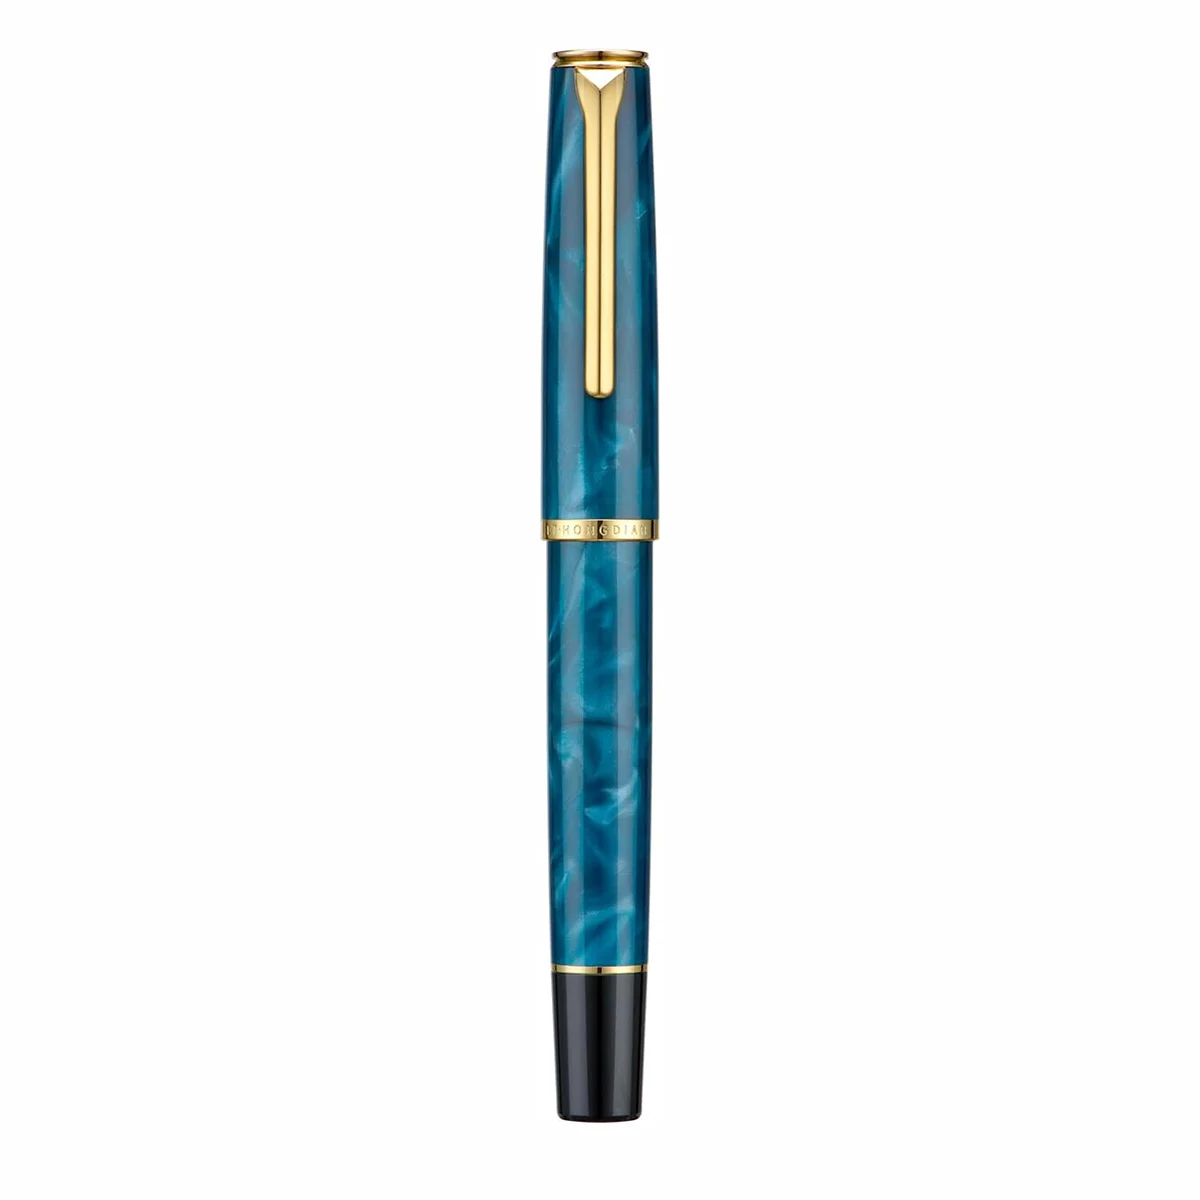 Hongdian N12 Piston Fountain Pen Extra Fine / Fine Nib, Beautiful Acrylic Writing Gift Pen Set images - 6